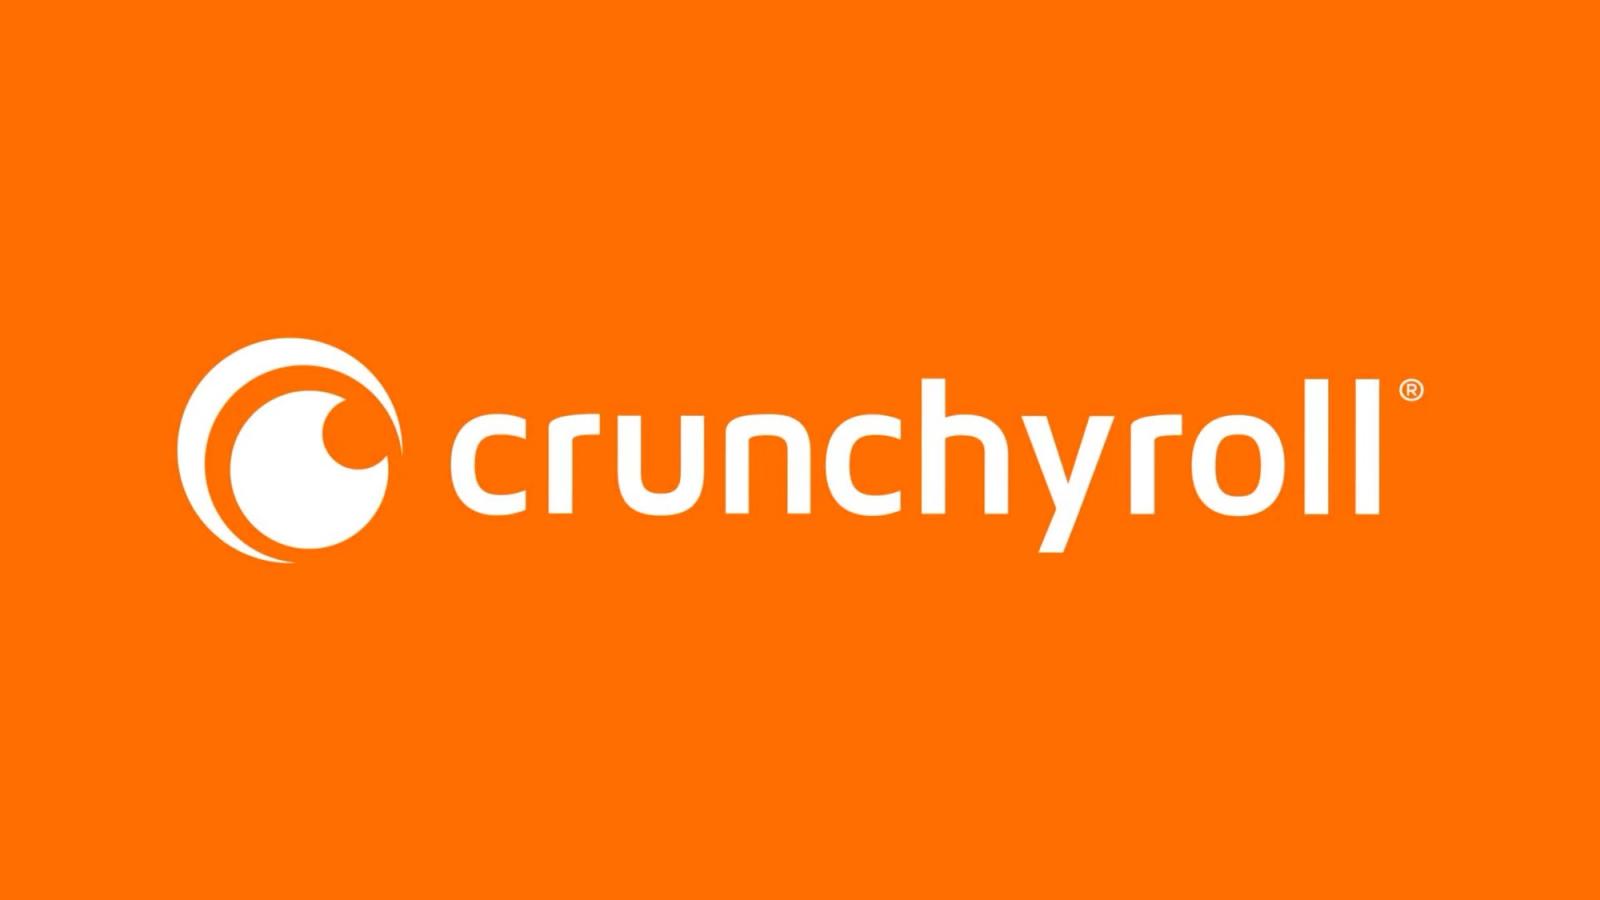 Crunchyroll network error - Crunchyroll logo